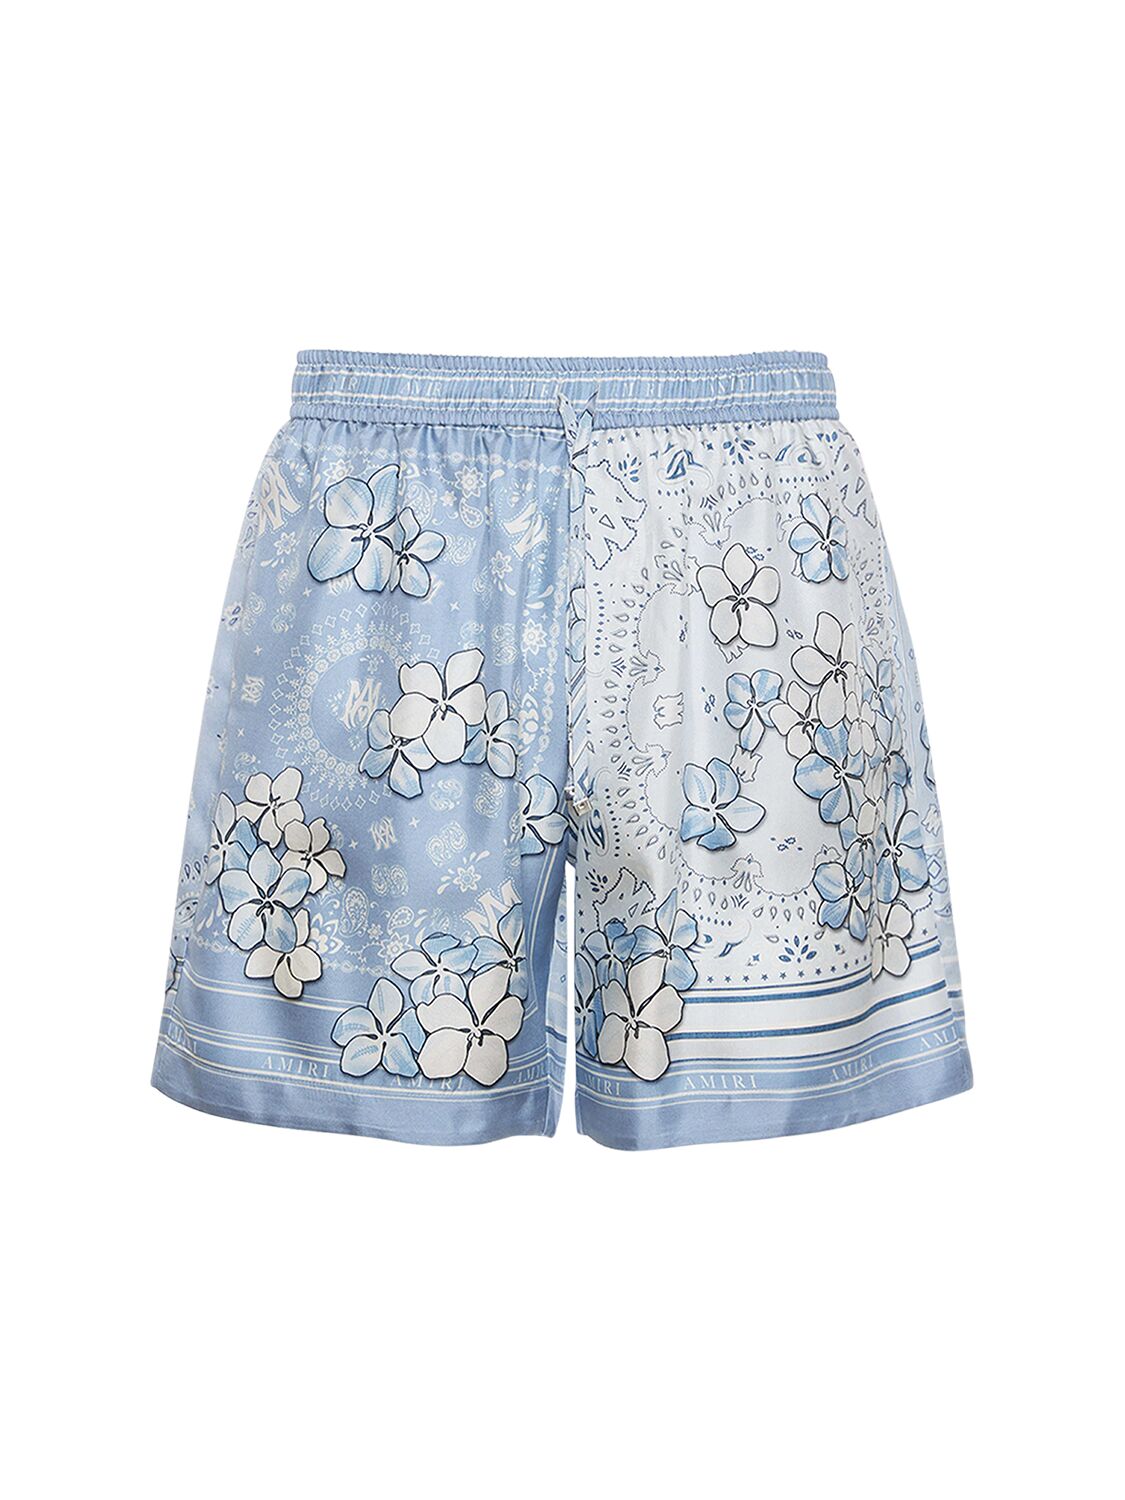 Image of Floral Bandana Shorts